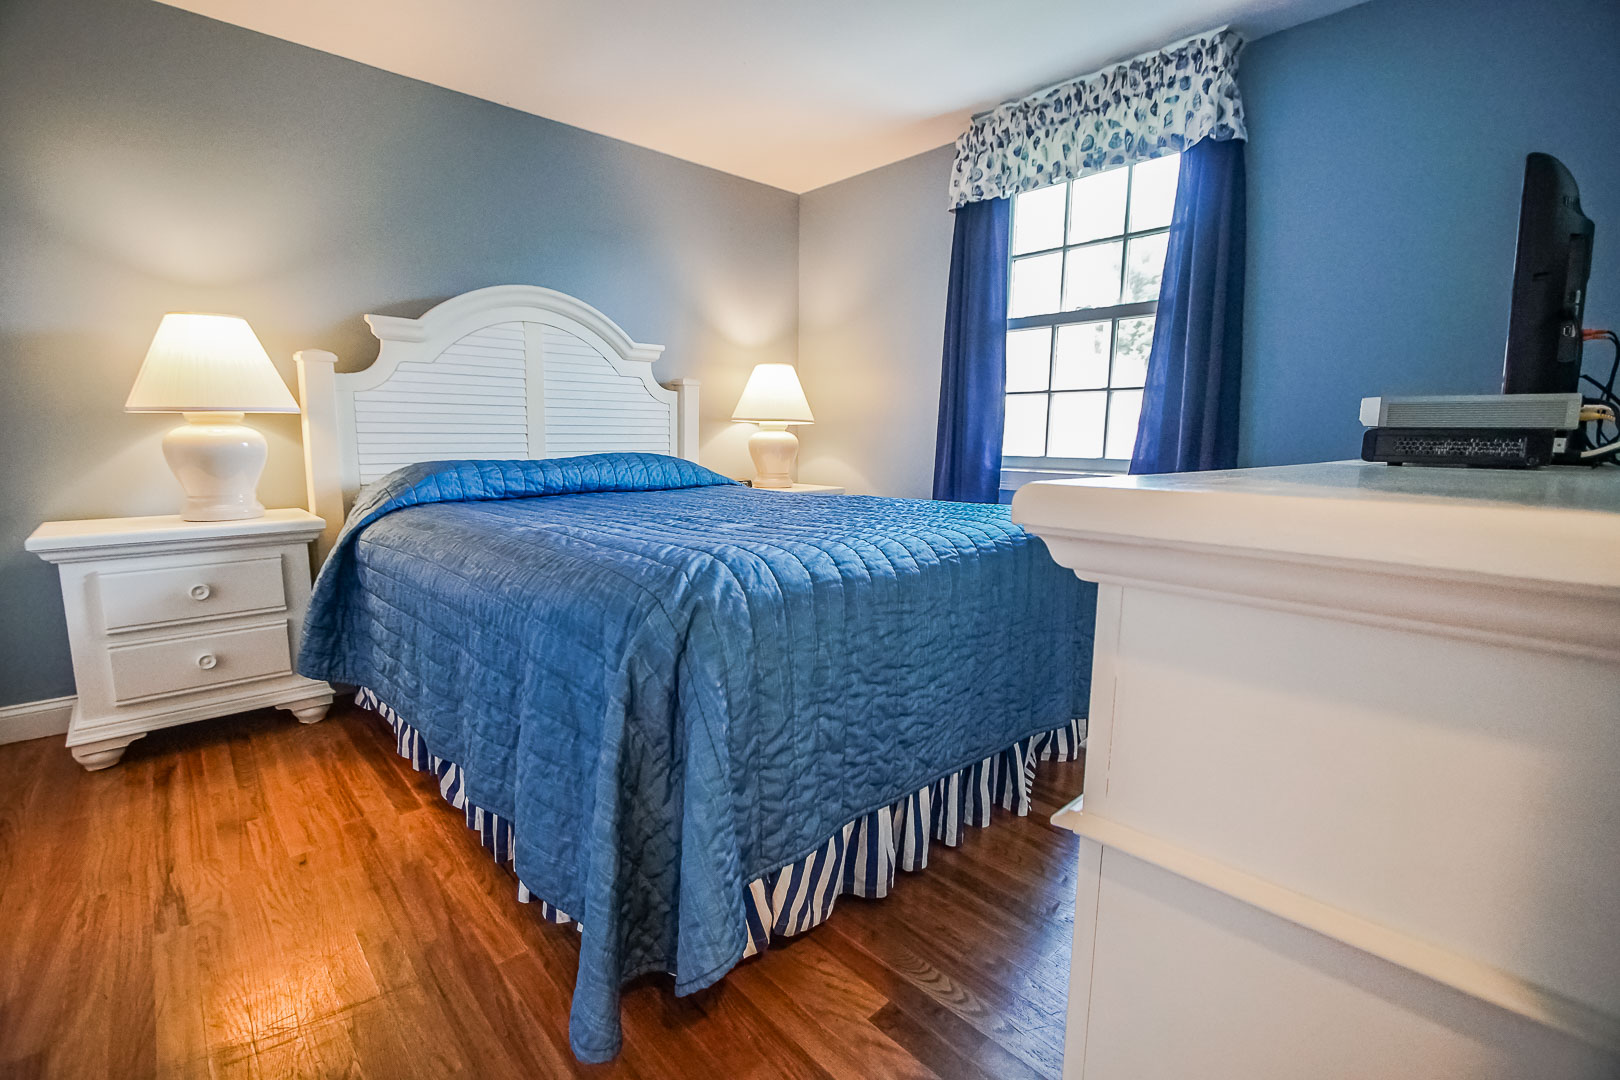 A cozy bedroom at VRI's Beachside Village Resort in Massachusetts.